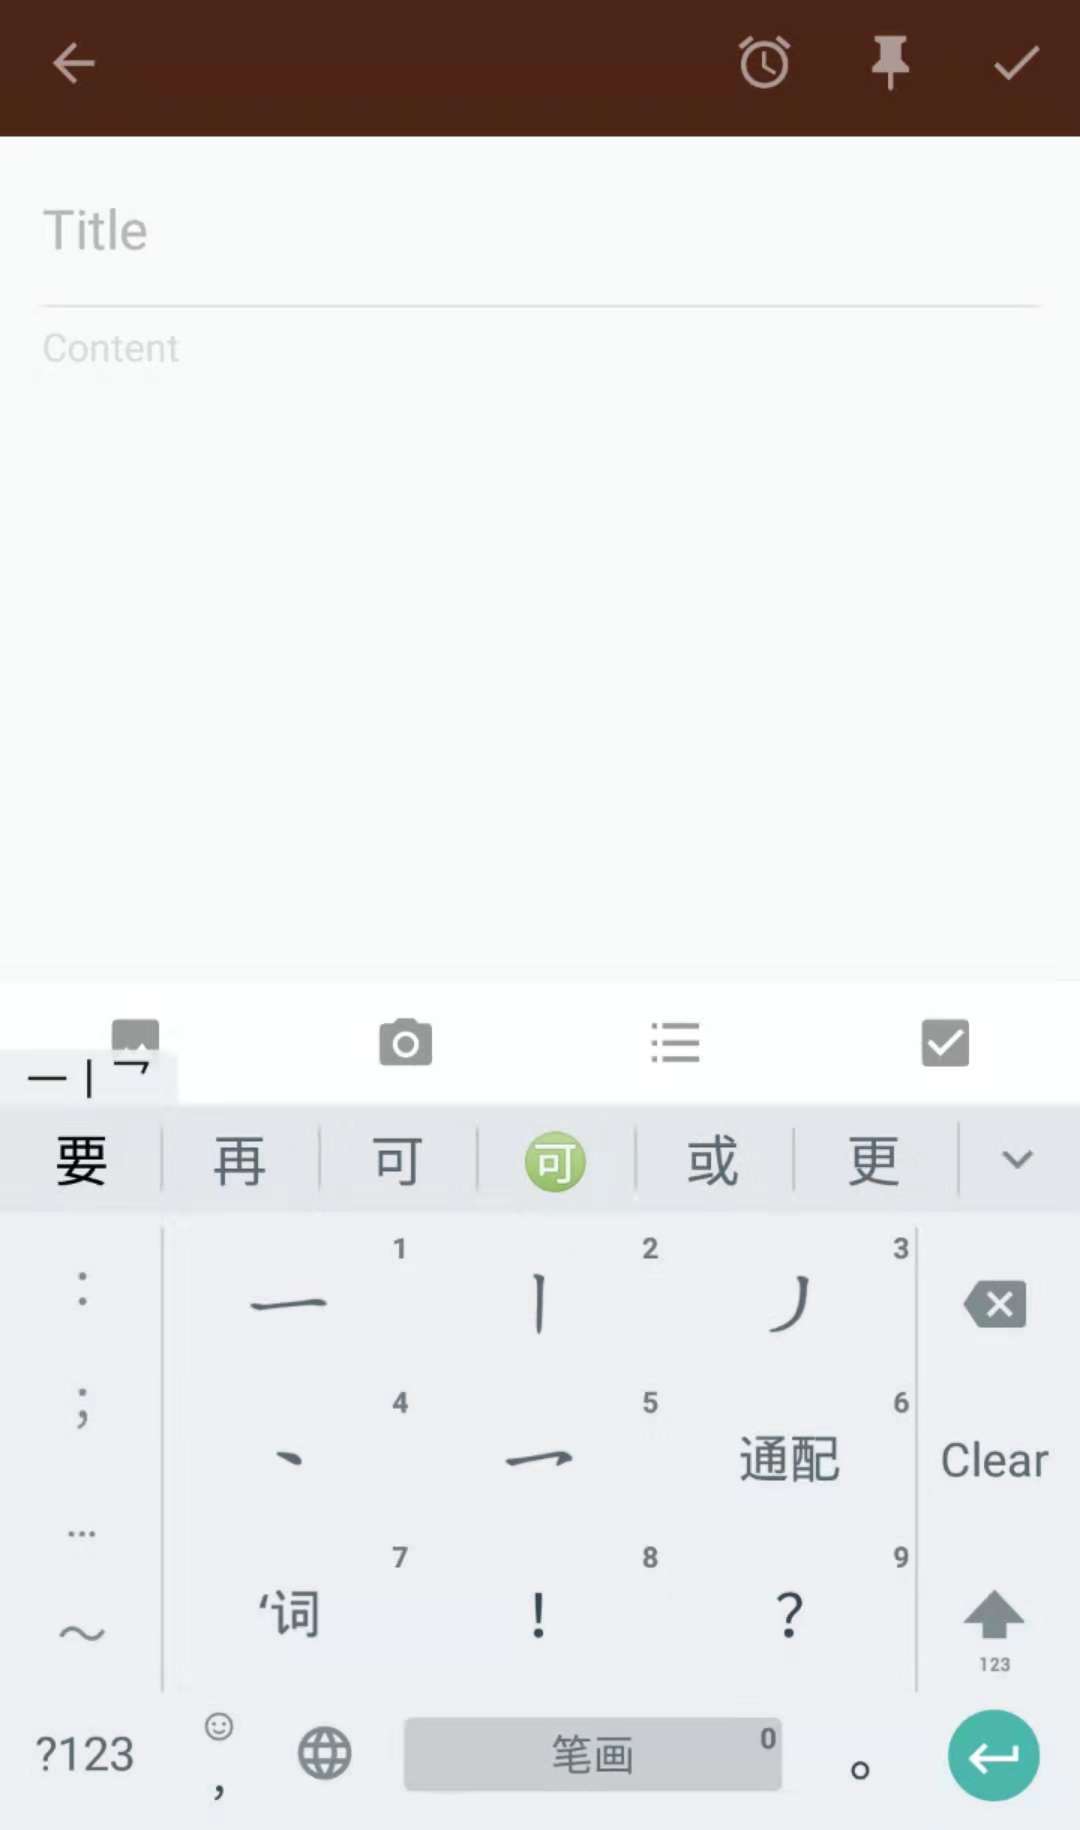 Chinese Keyboard: Using the Chinese radical input method